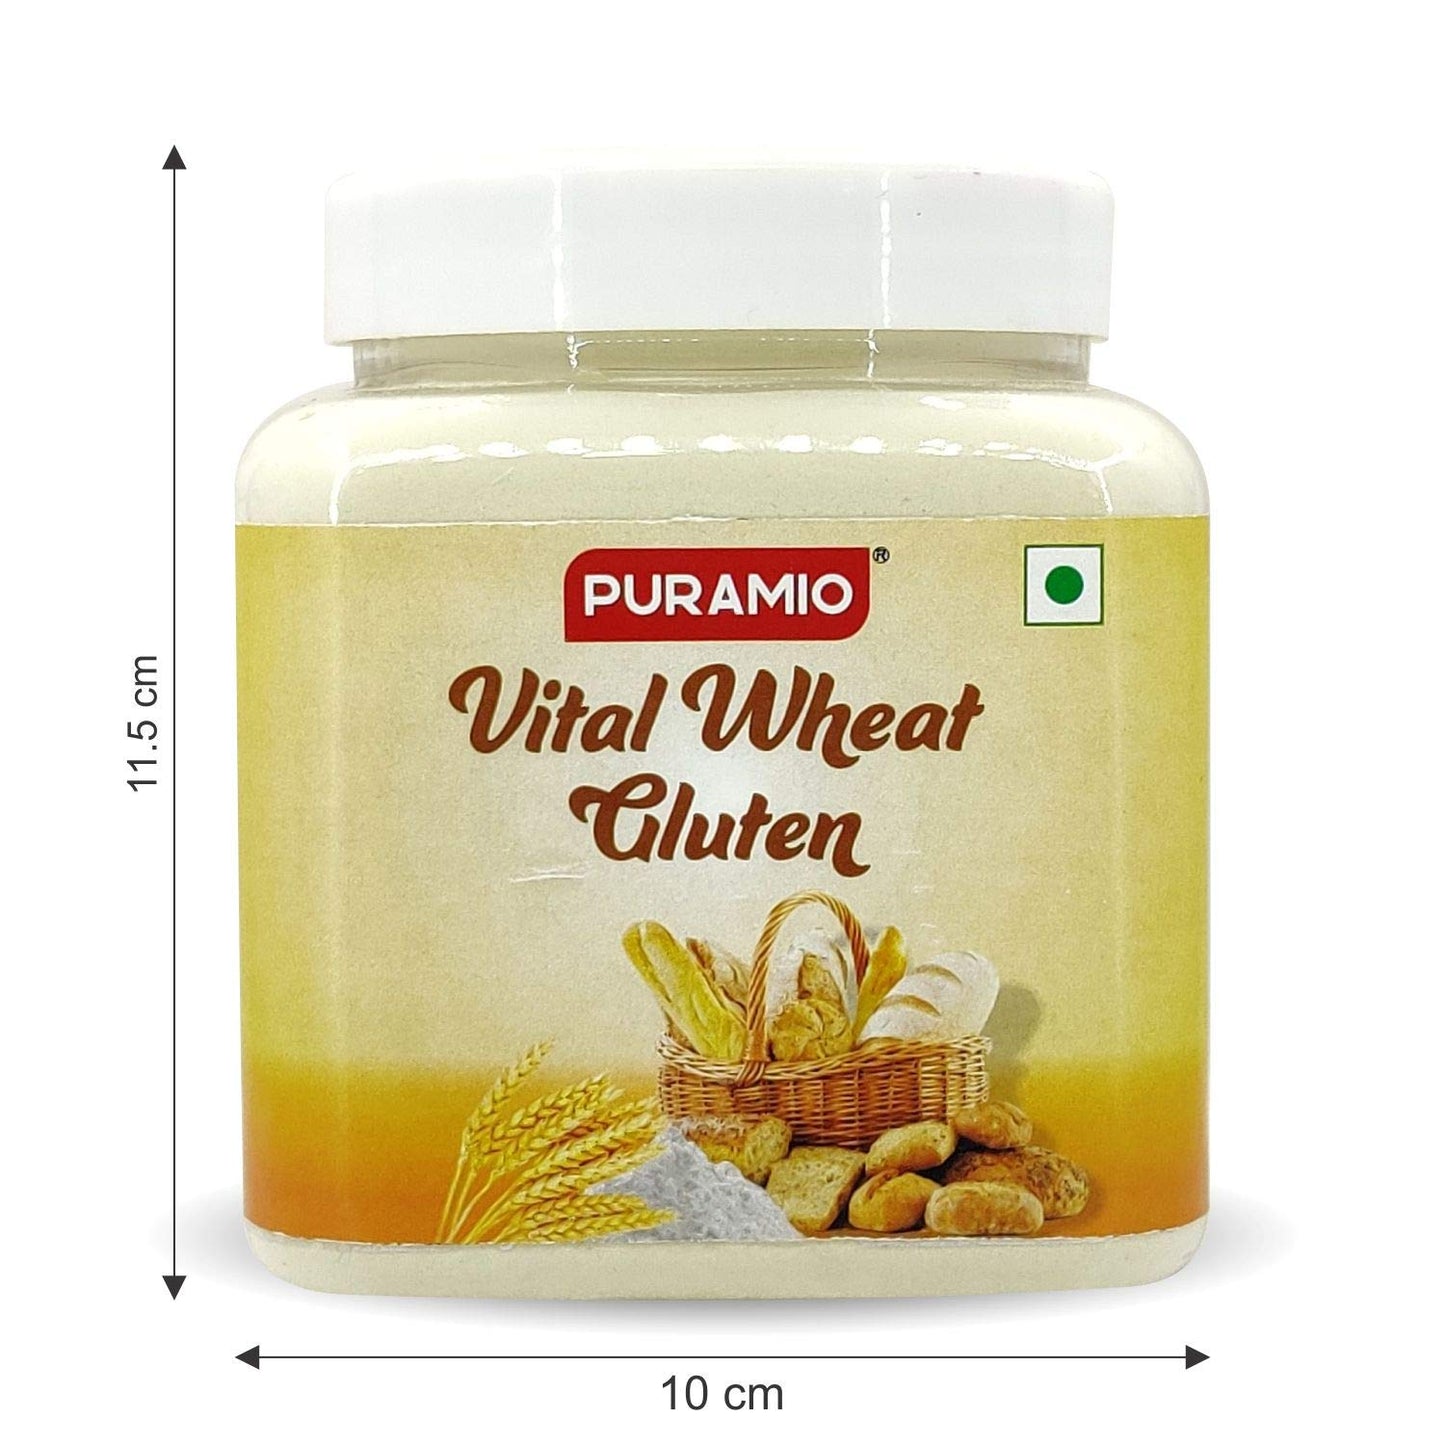 Puramio Combo Pack of- Vital Wheat Gluten-600g & Bread Improver-250g